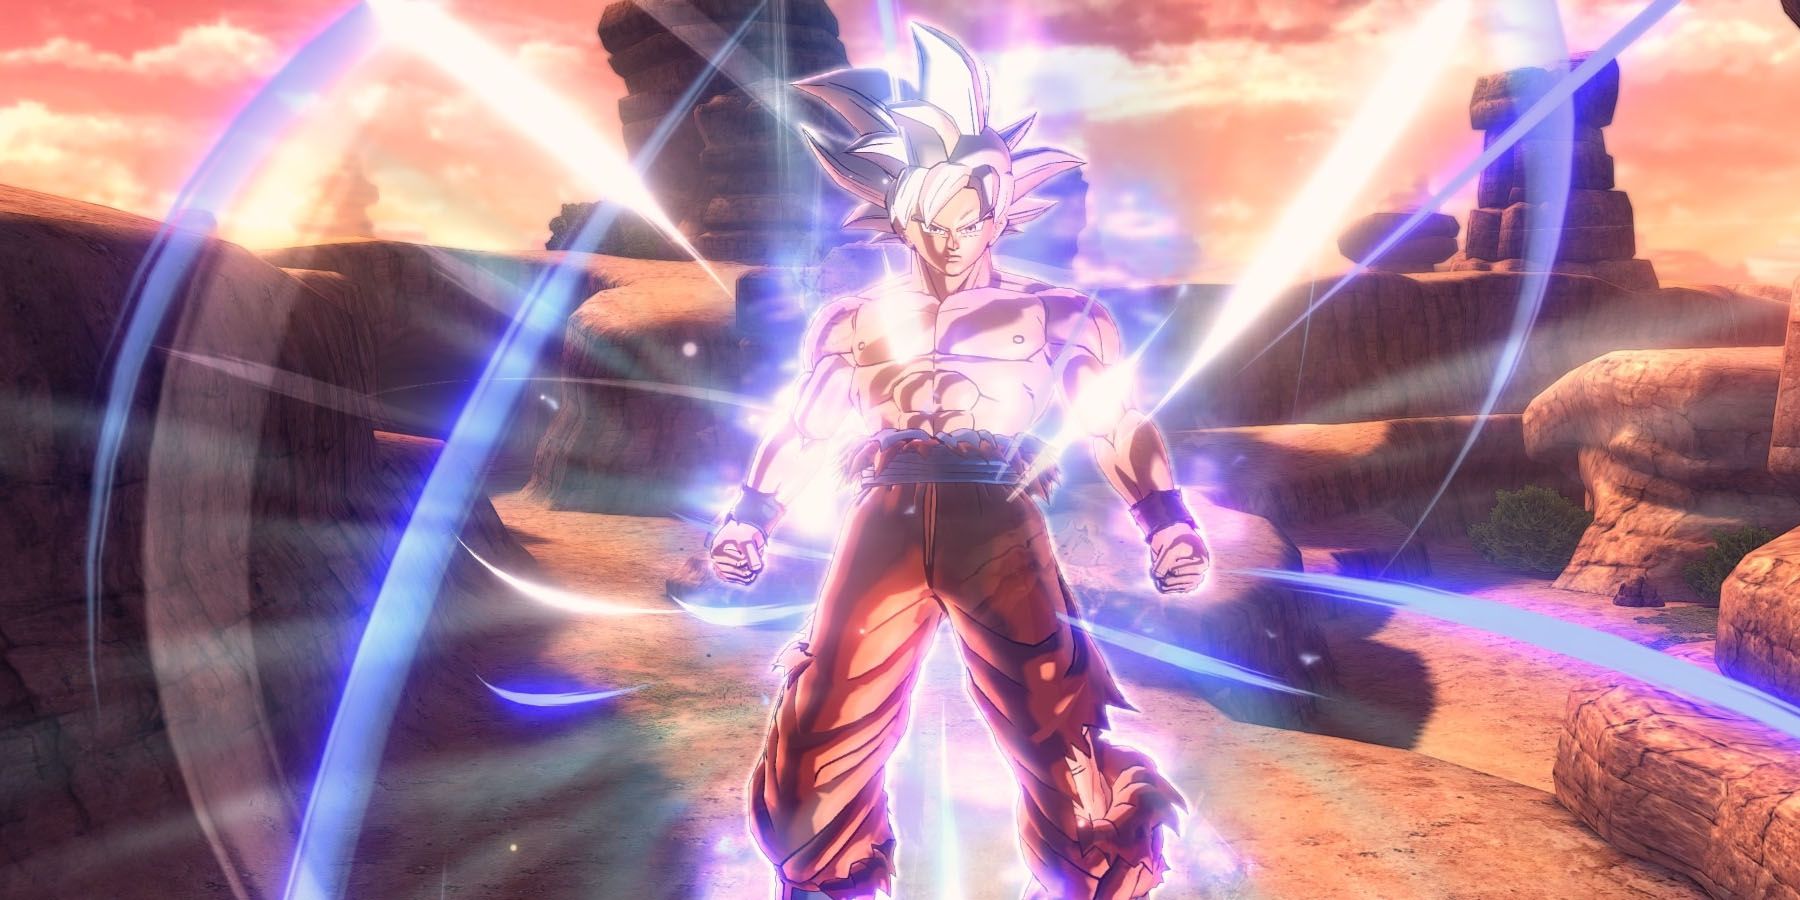 Goku attaining Perfected Ultra Instinct